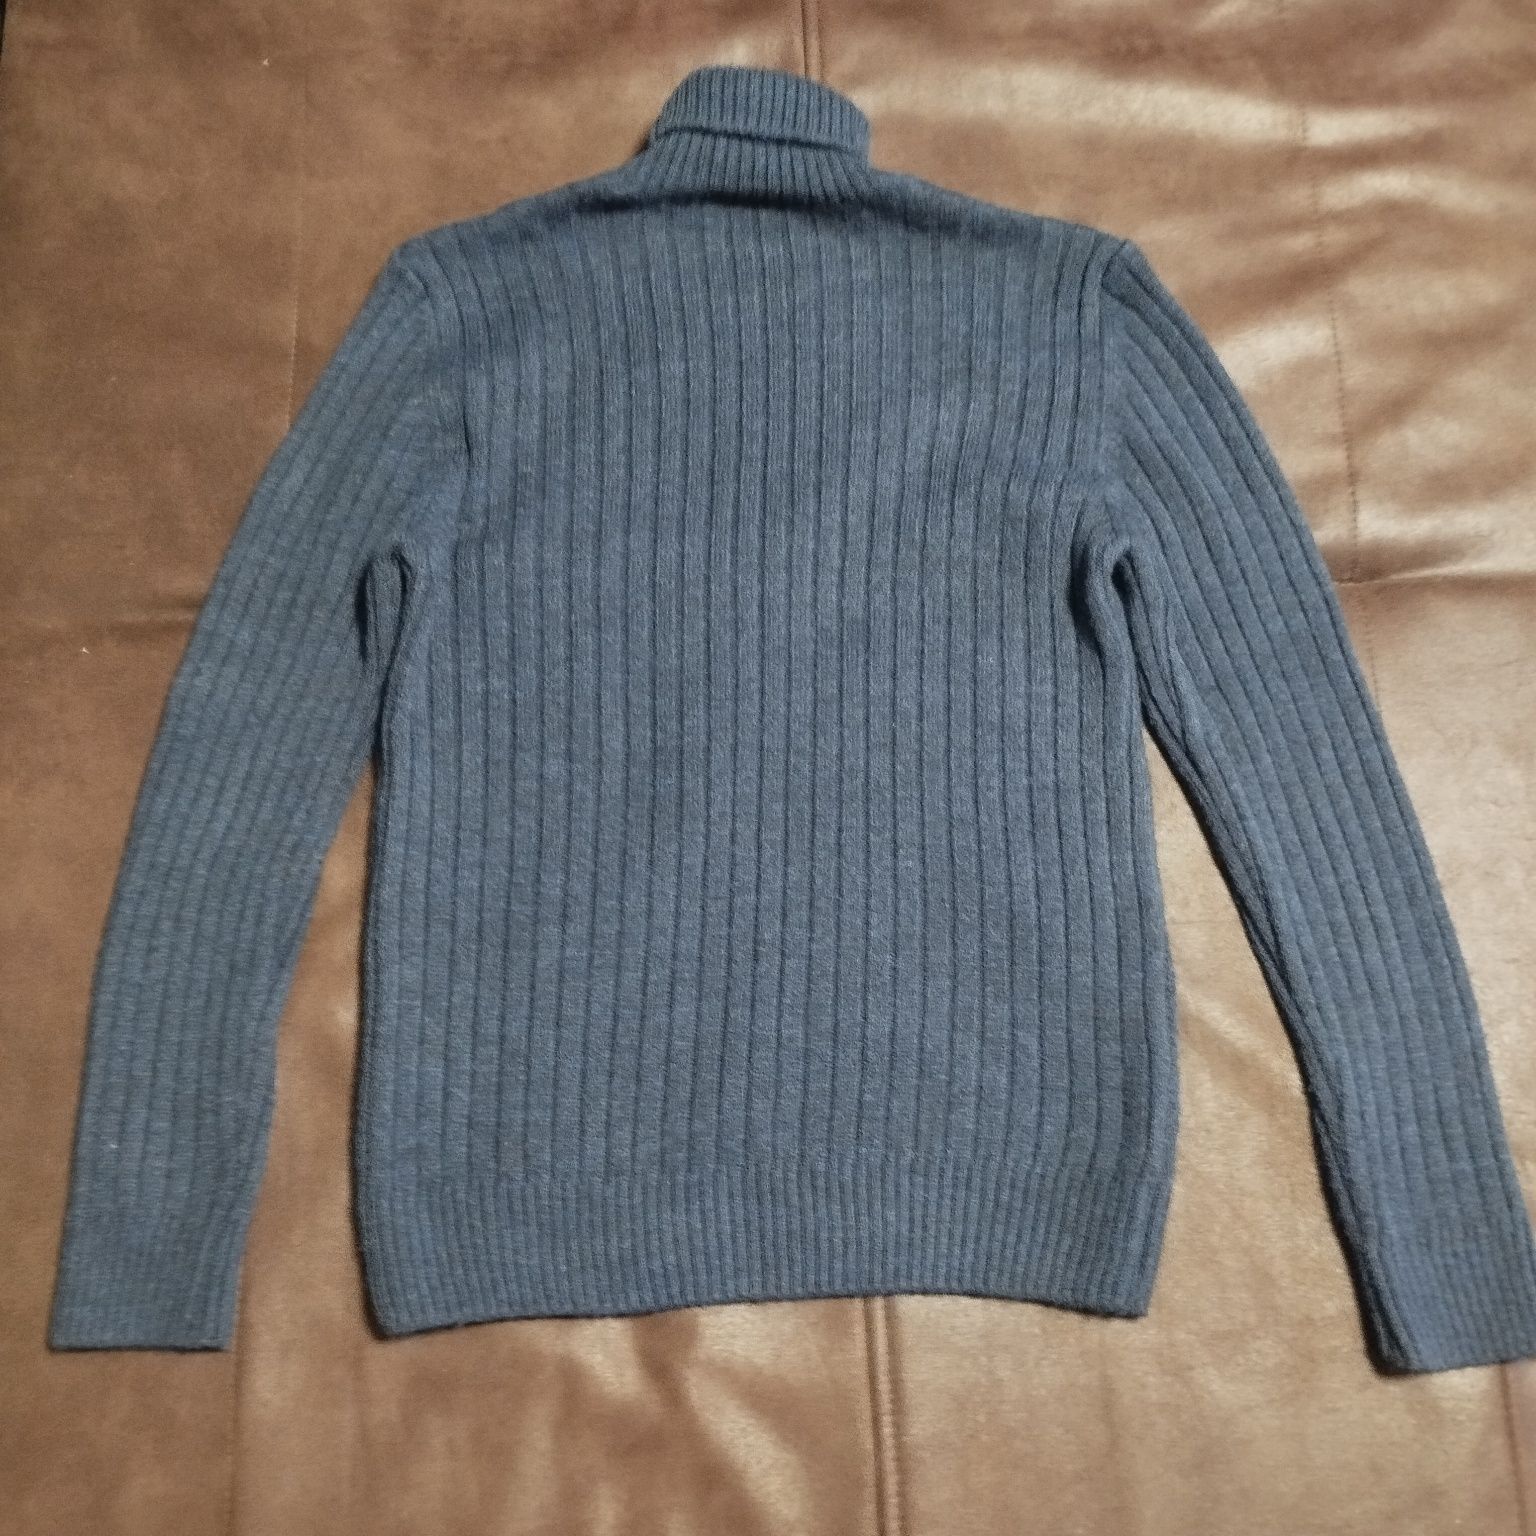 Теплый зимний мужской свитер кофта світєр размер М